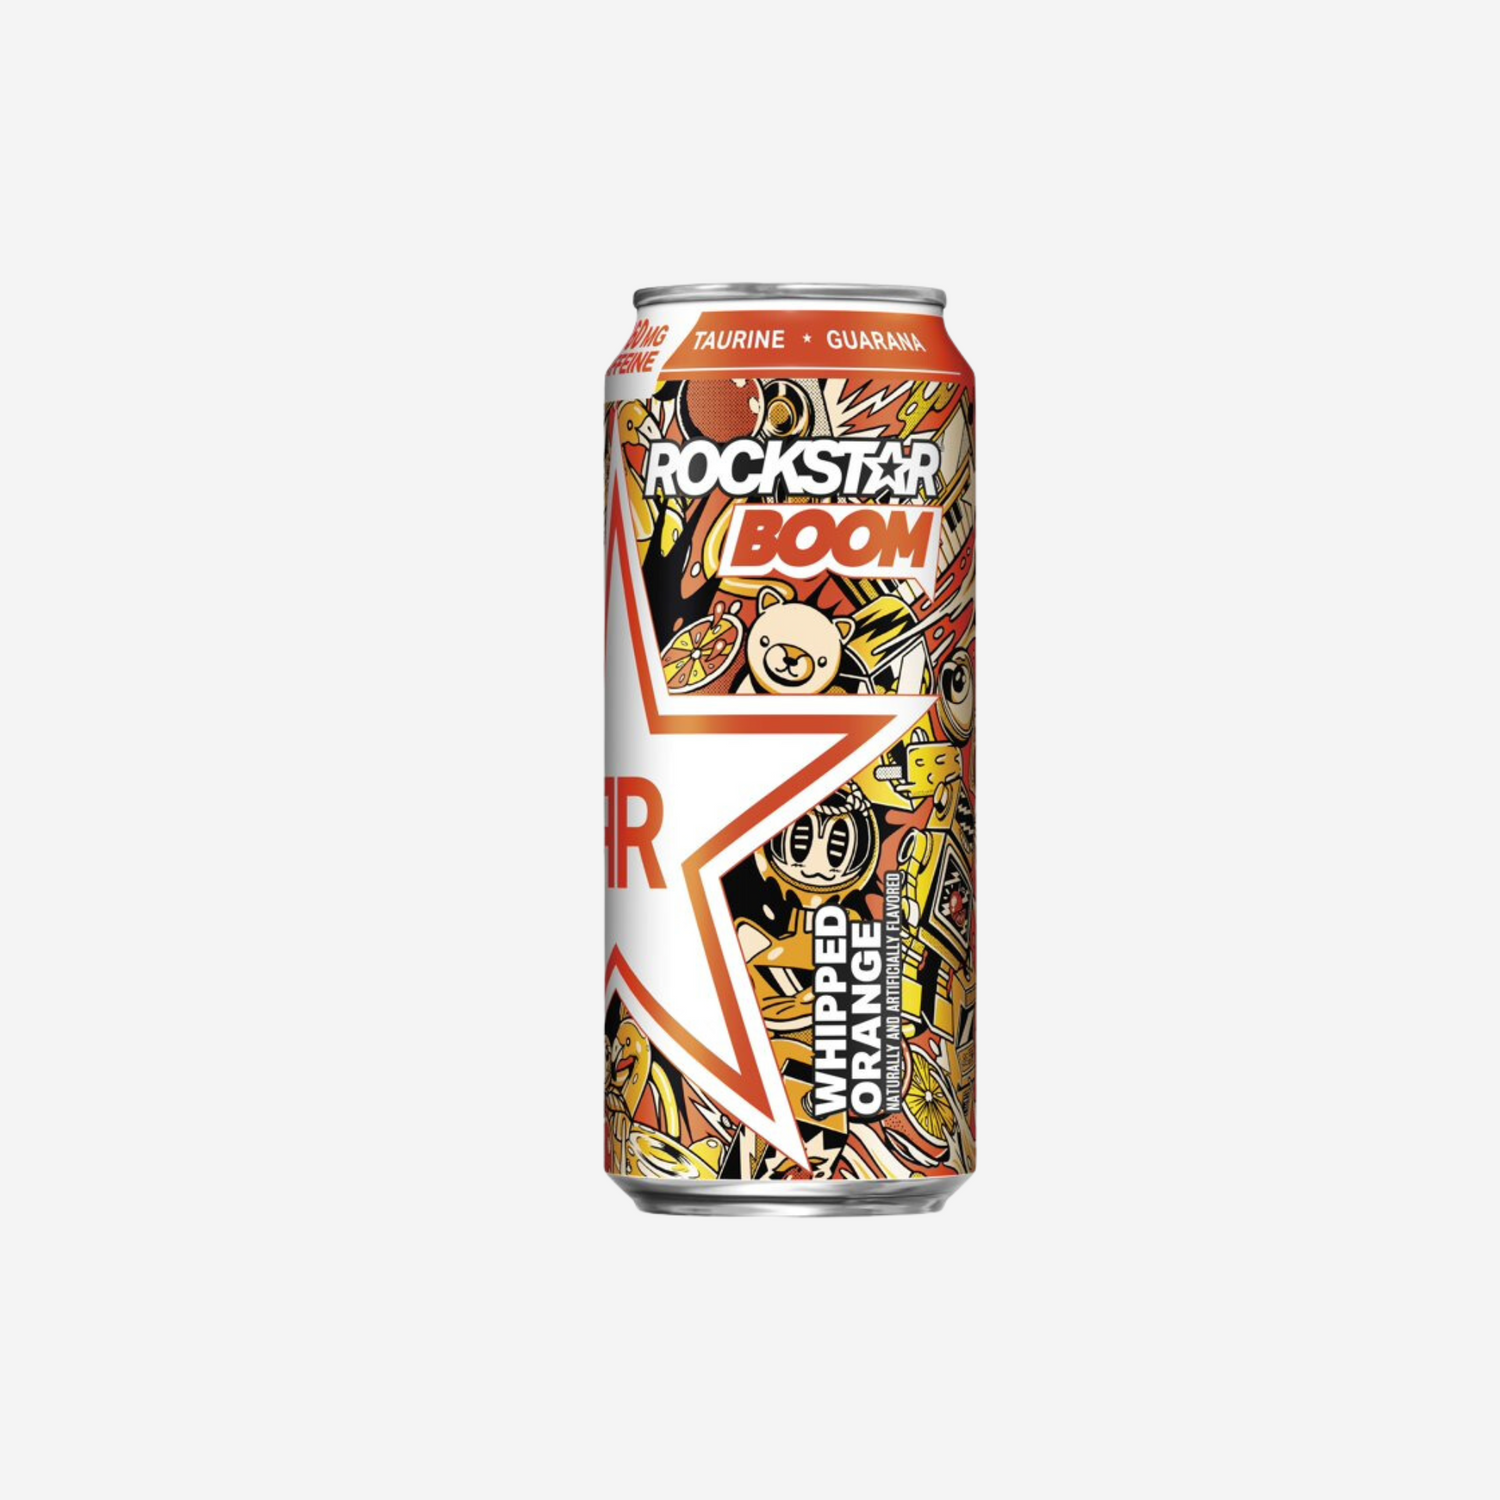 Rockstar Boom, Whipped & Blended Orange Energy Drink, 16 oz, 12 Pack Cans